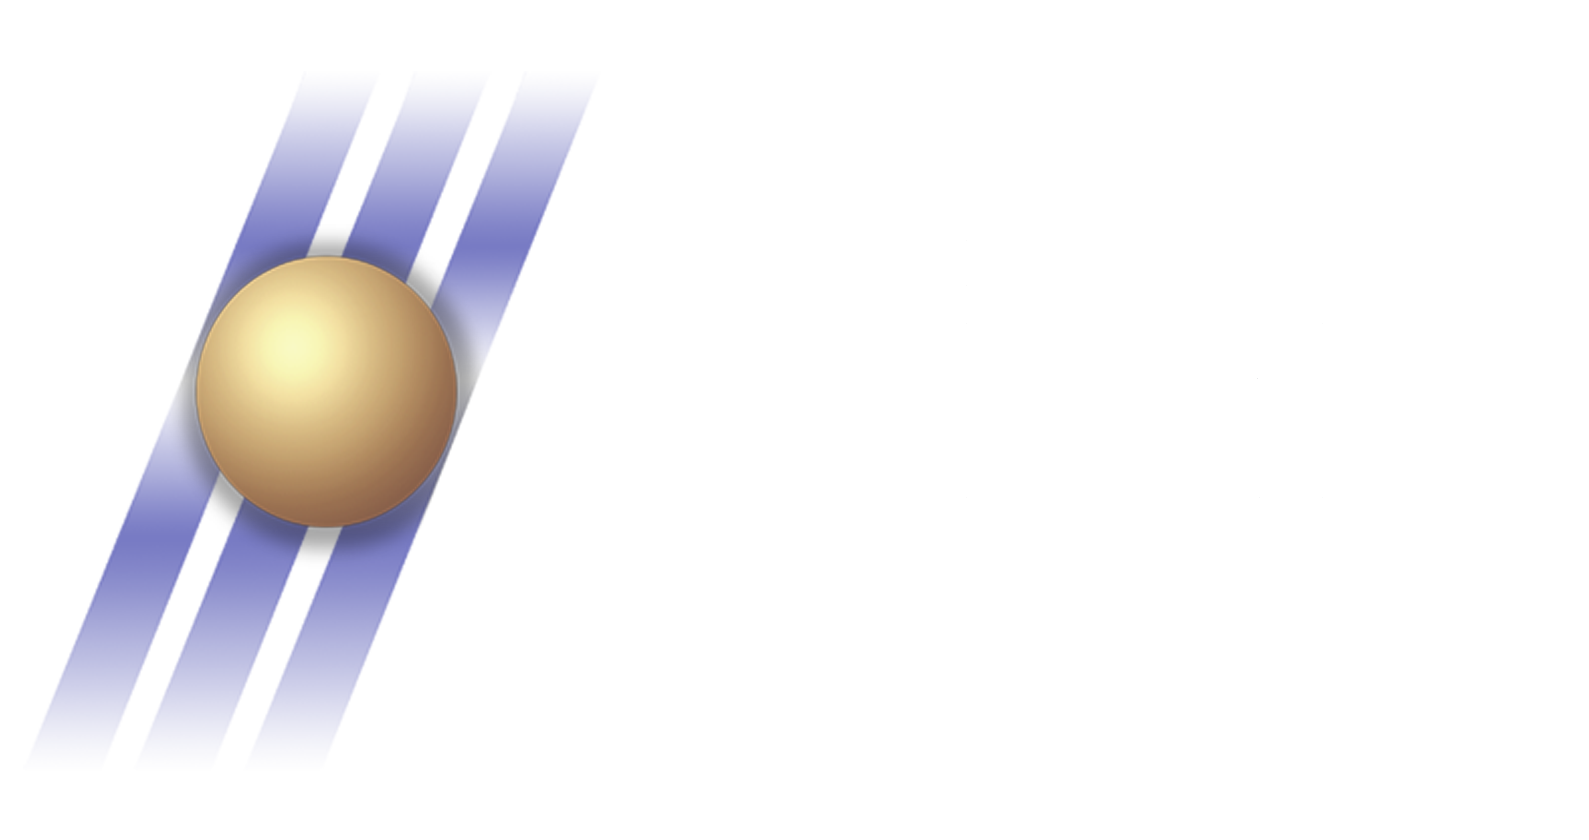 Irian Mecatronics